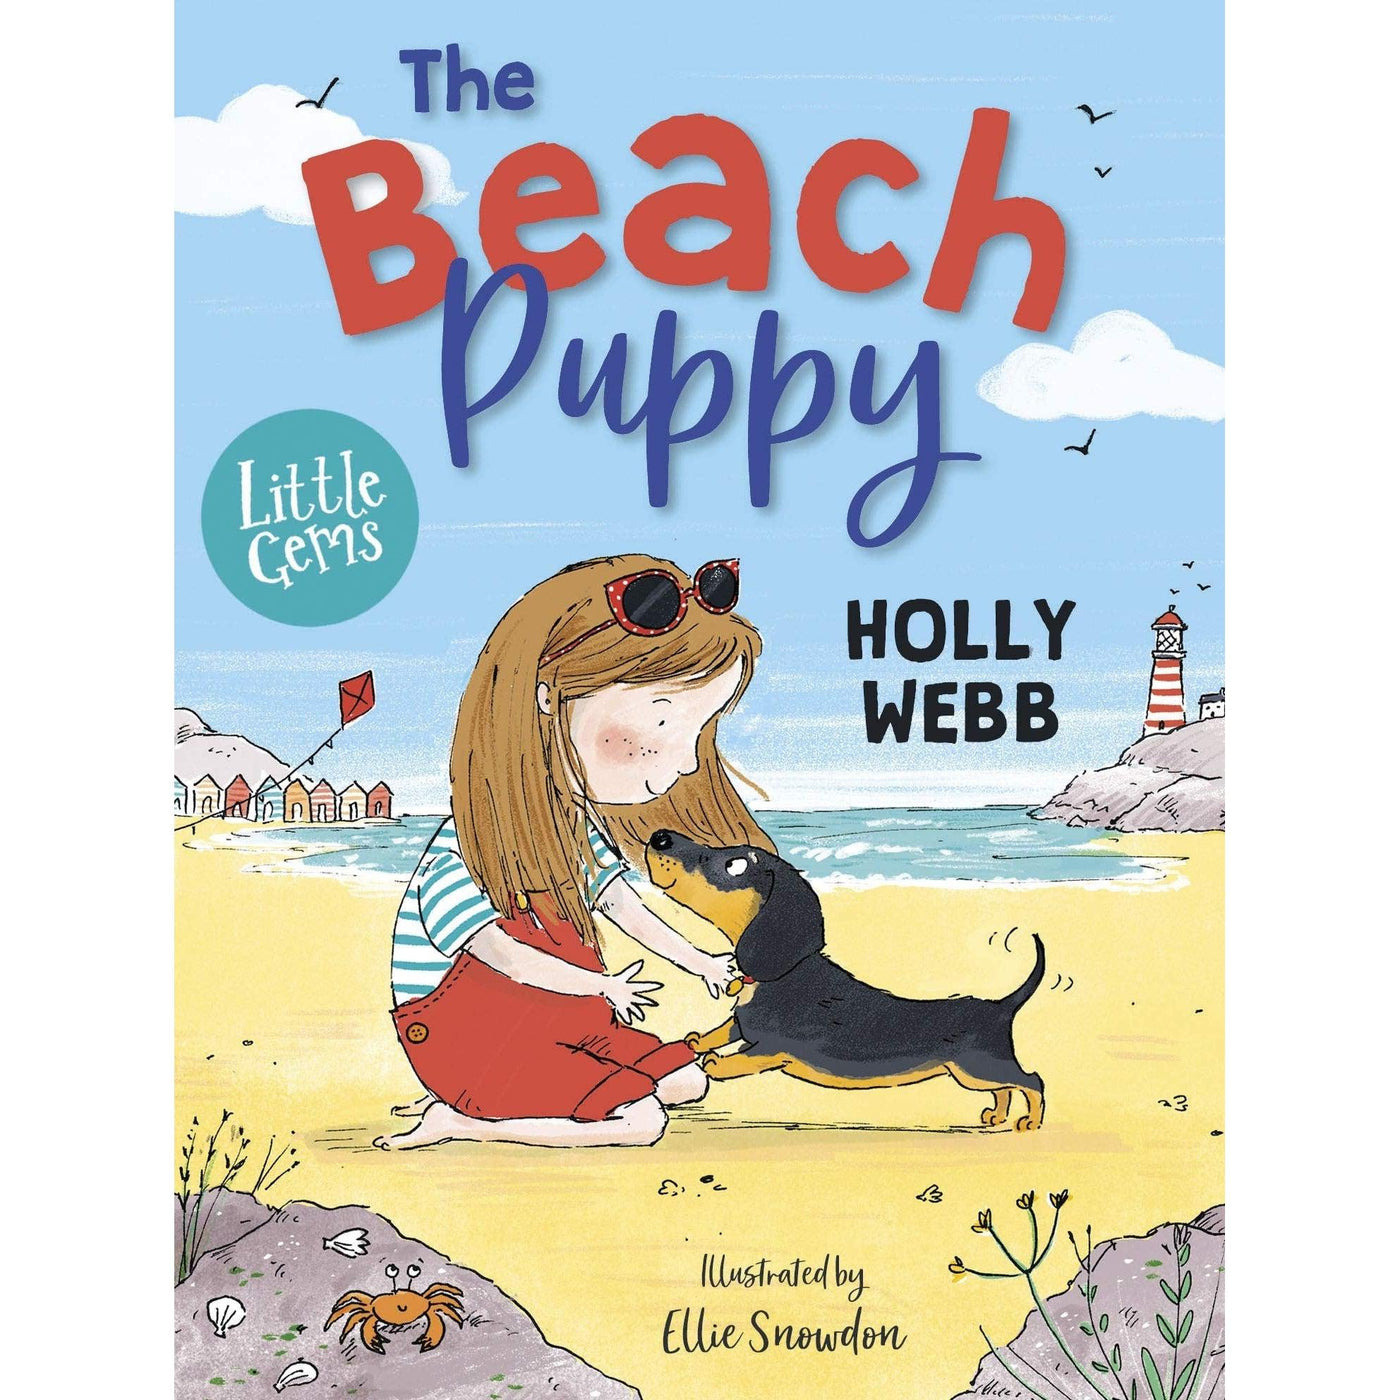 The Beach Puppy